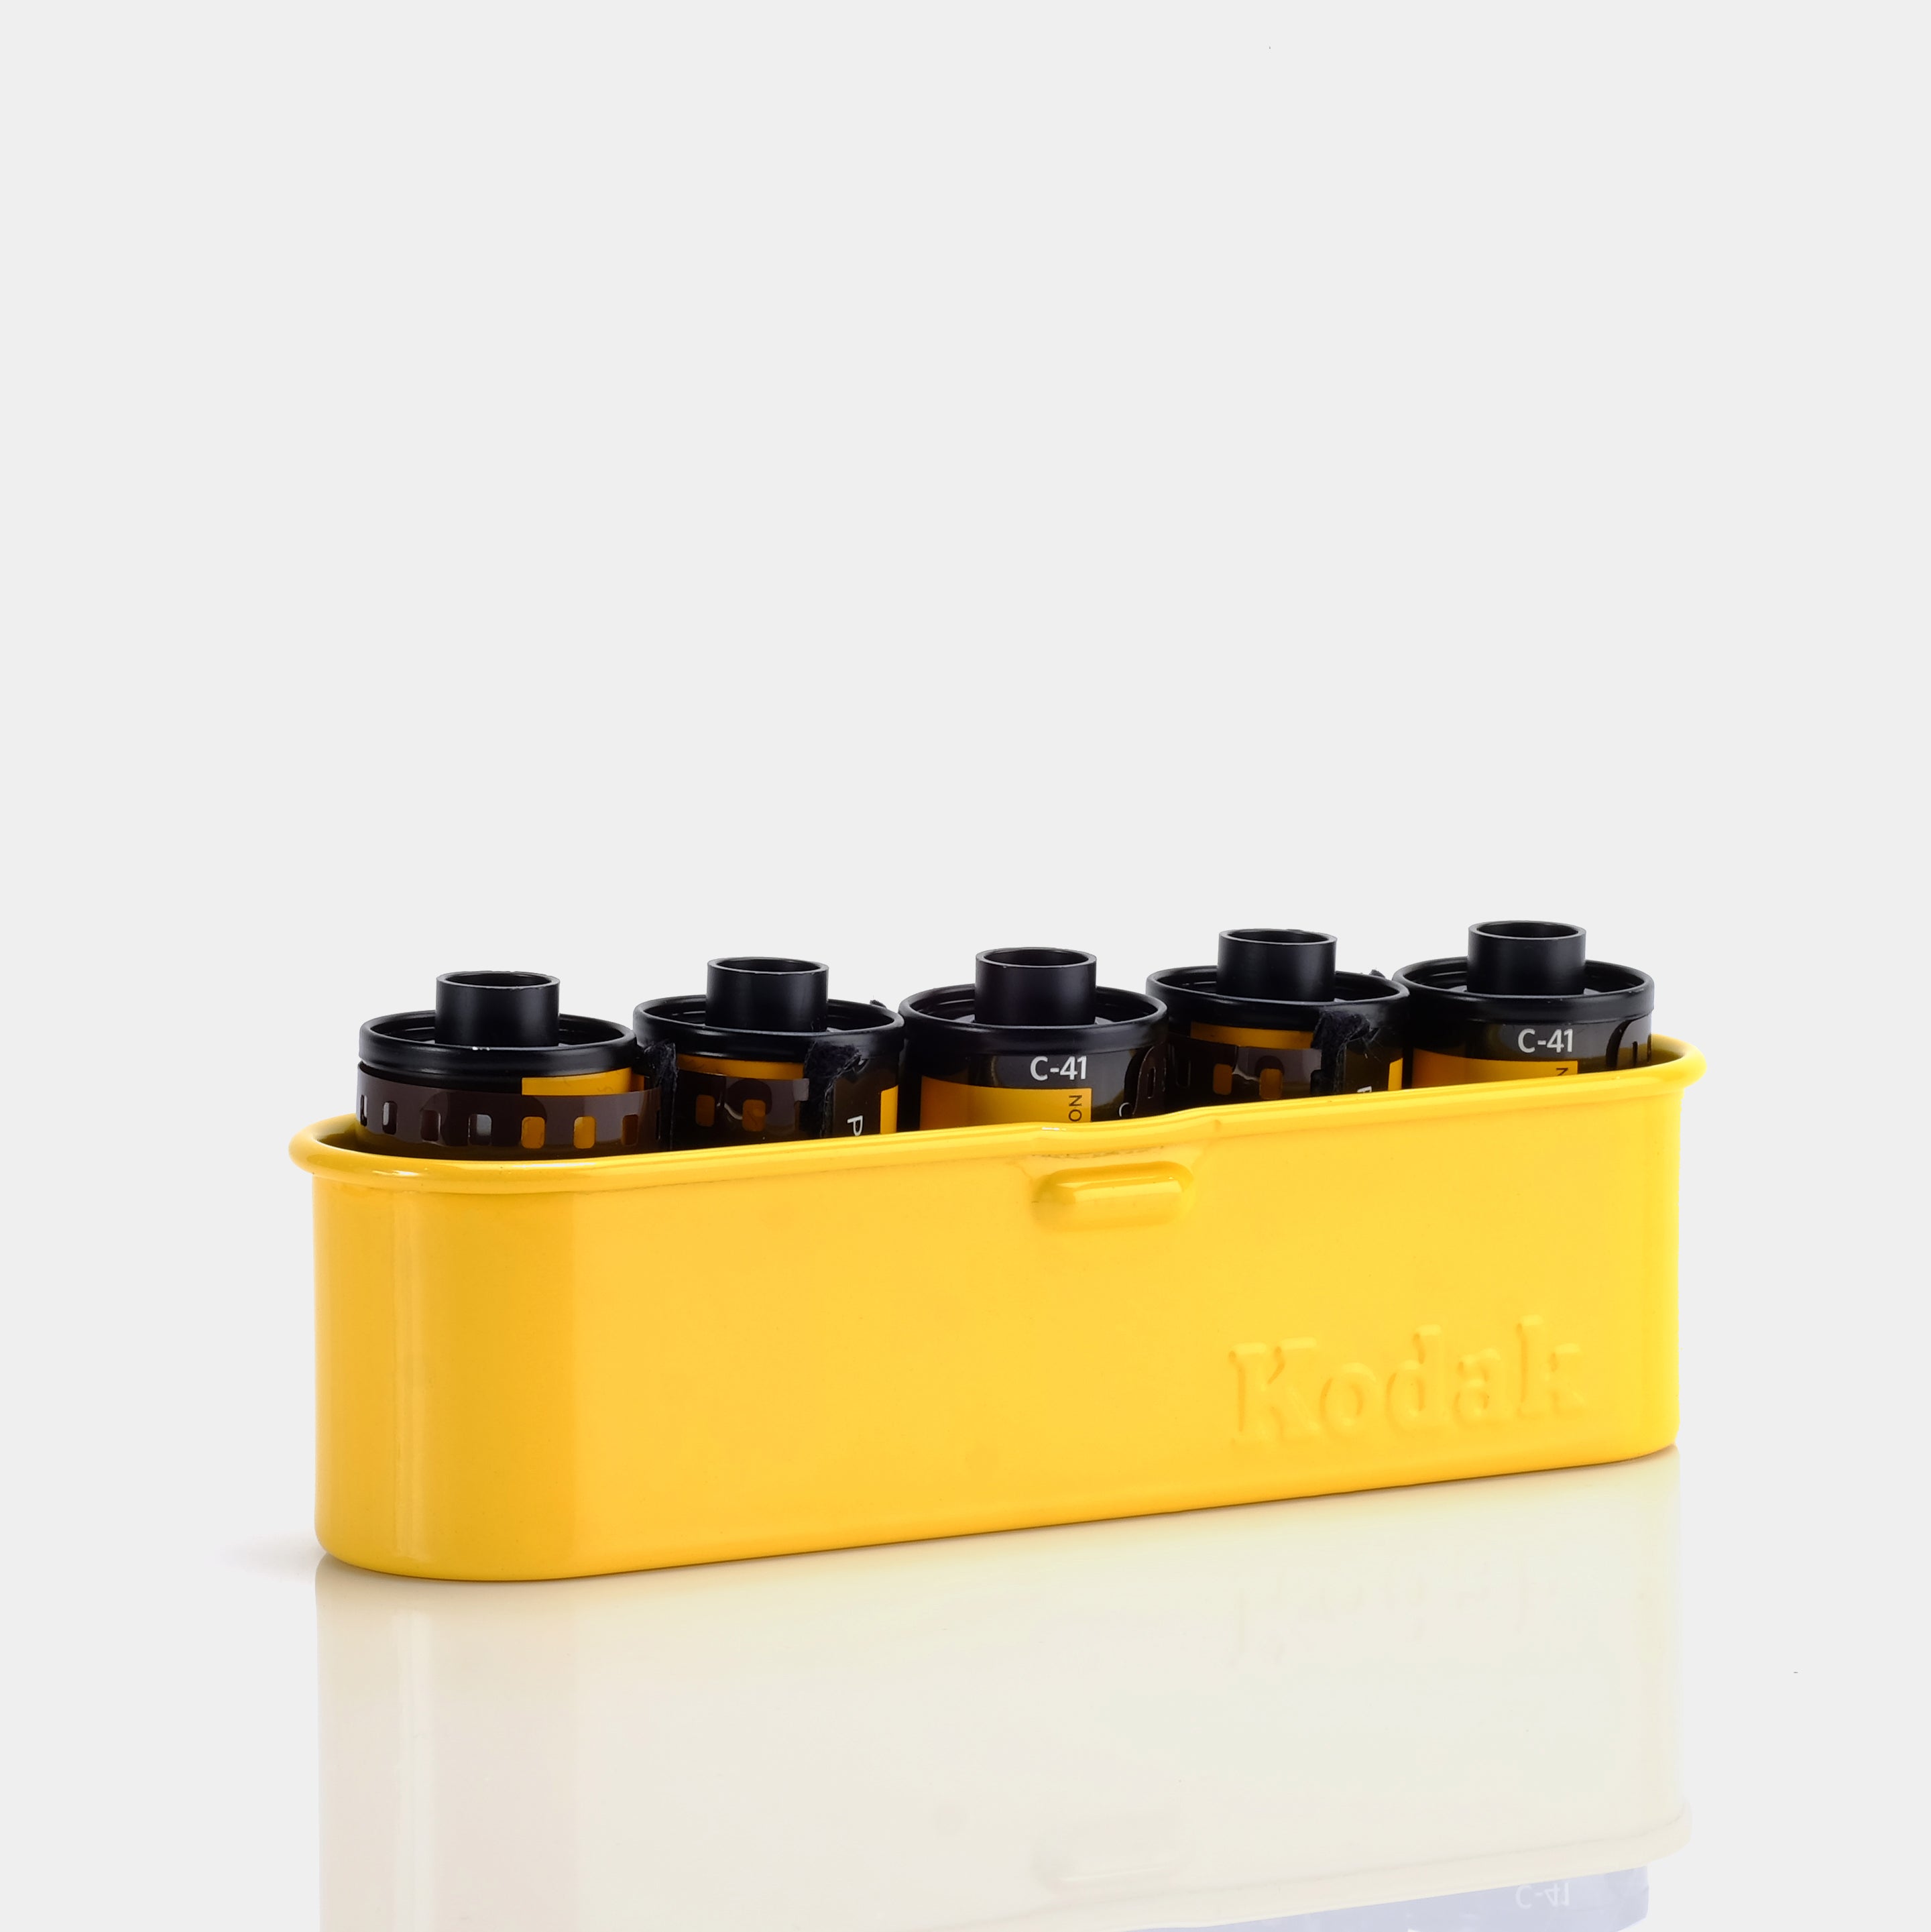 Kodak Yellow and Blue Classic 35mm Film Storage Case